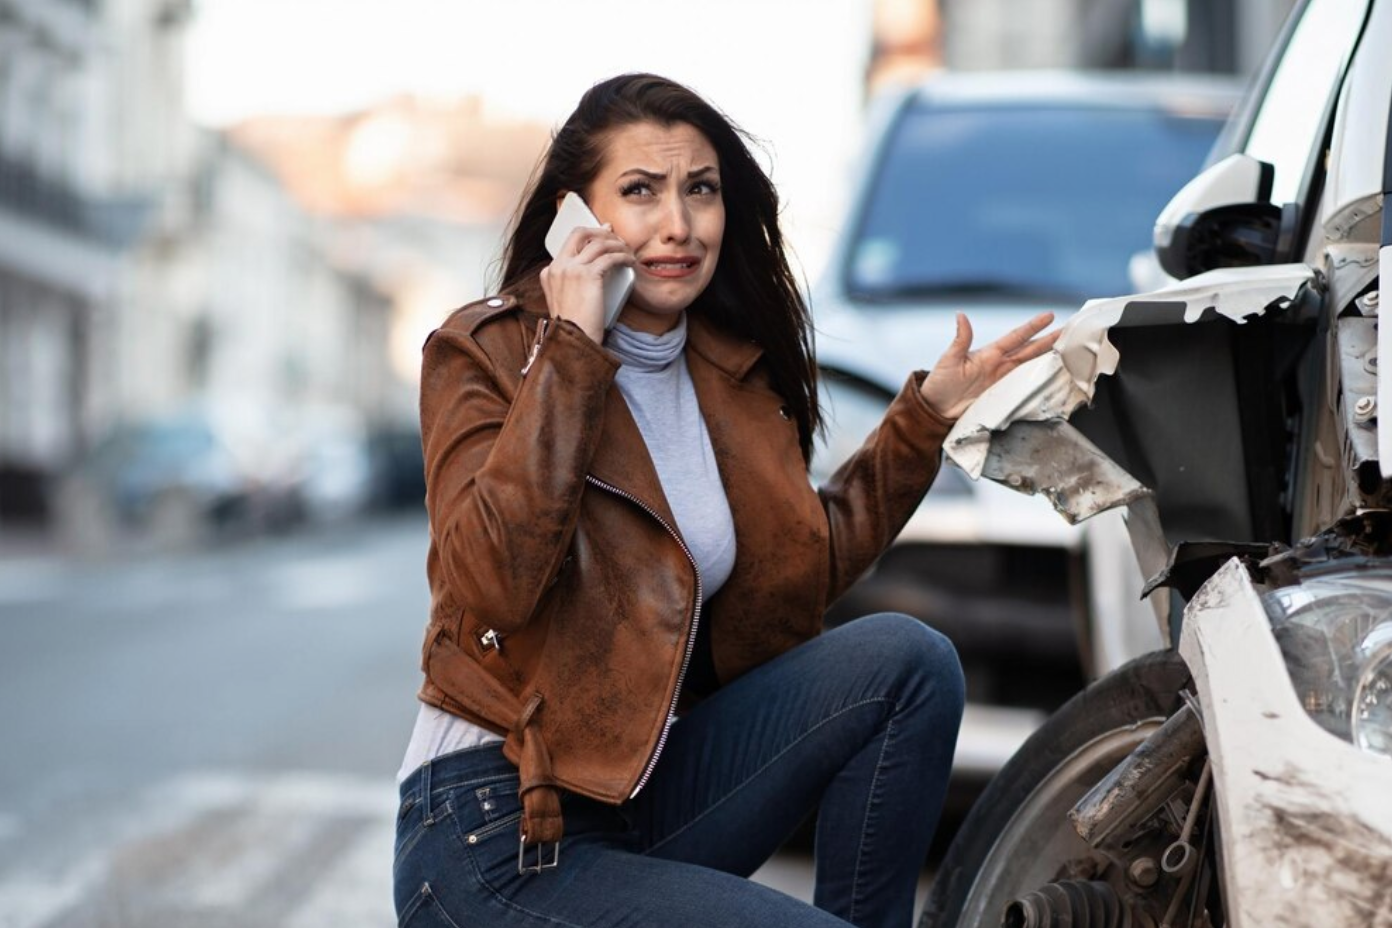 Woman on phone after car accident; image by Drazen Zigic, via Freepik.com.